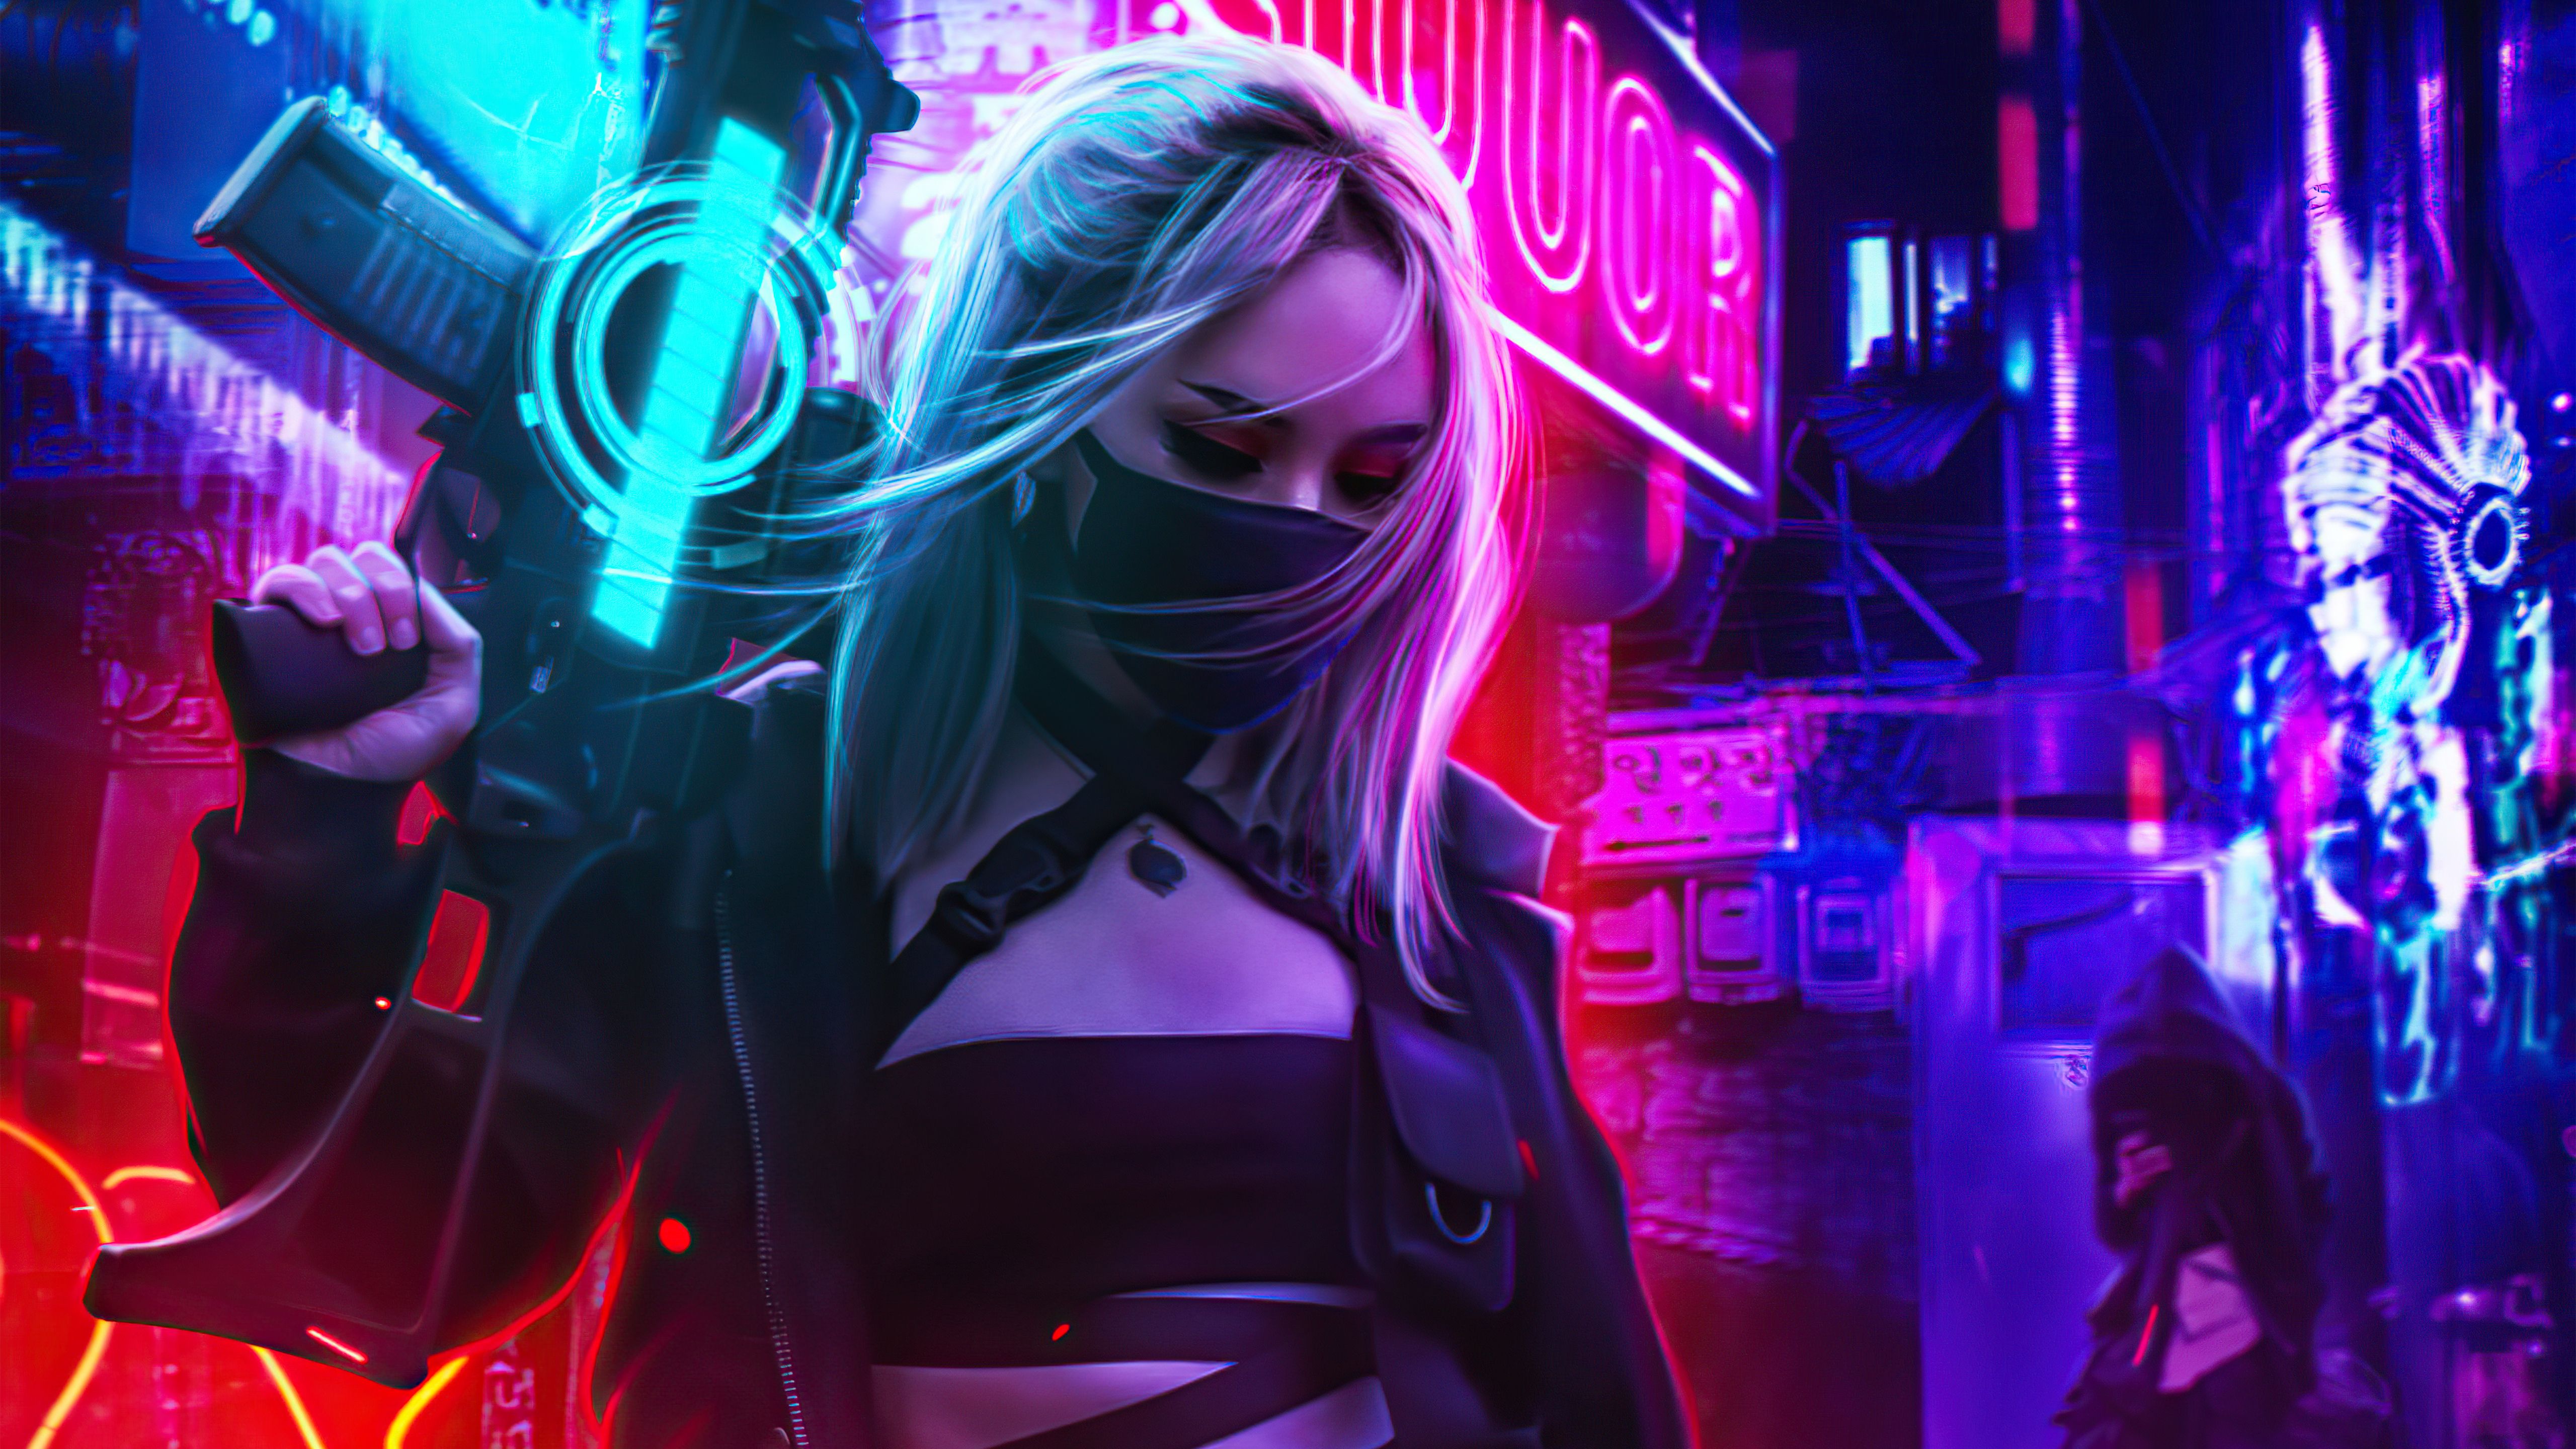 Cyberpunk girl with a gun in the neon city - Cyberpunk